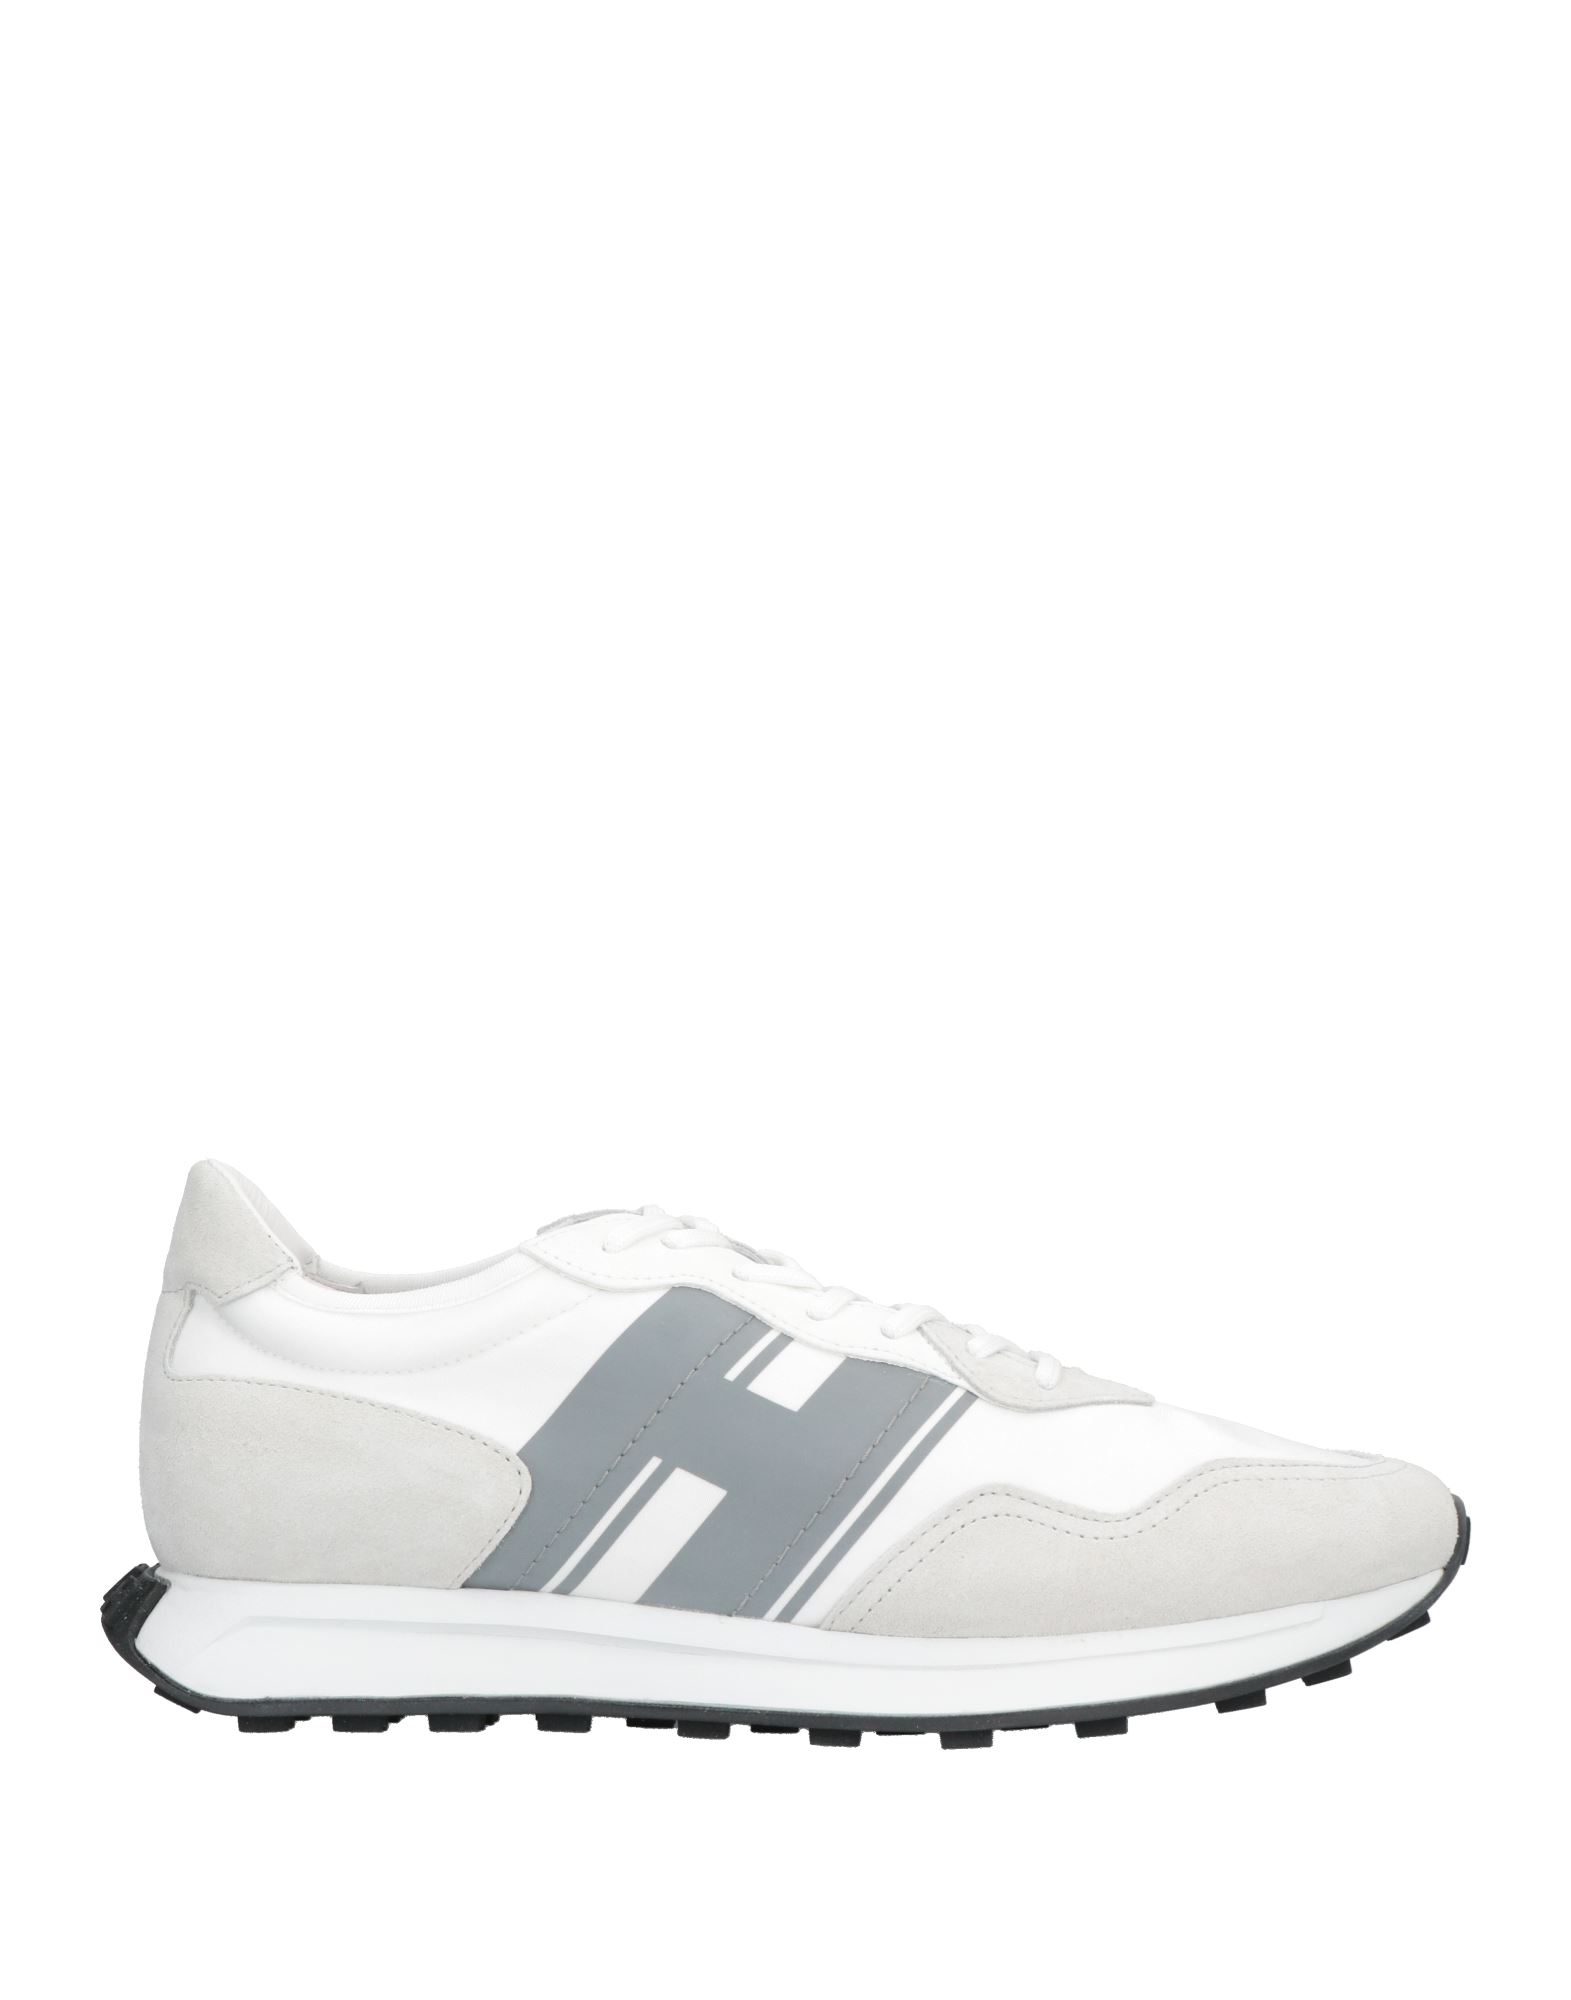 Hogan Sneakers In Light Grey